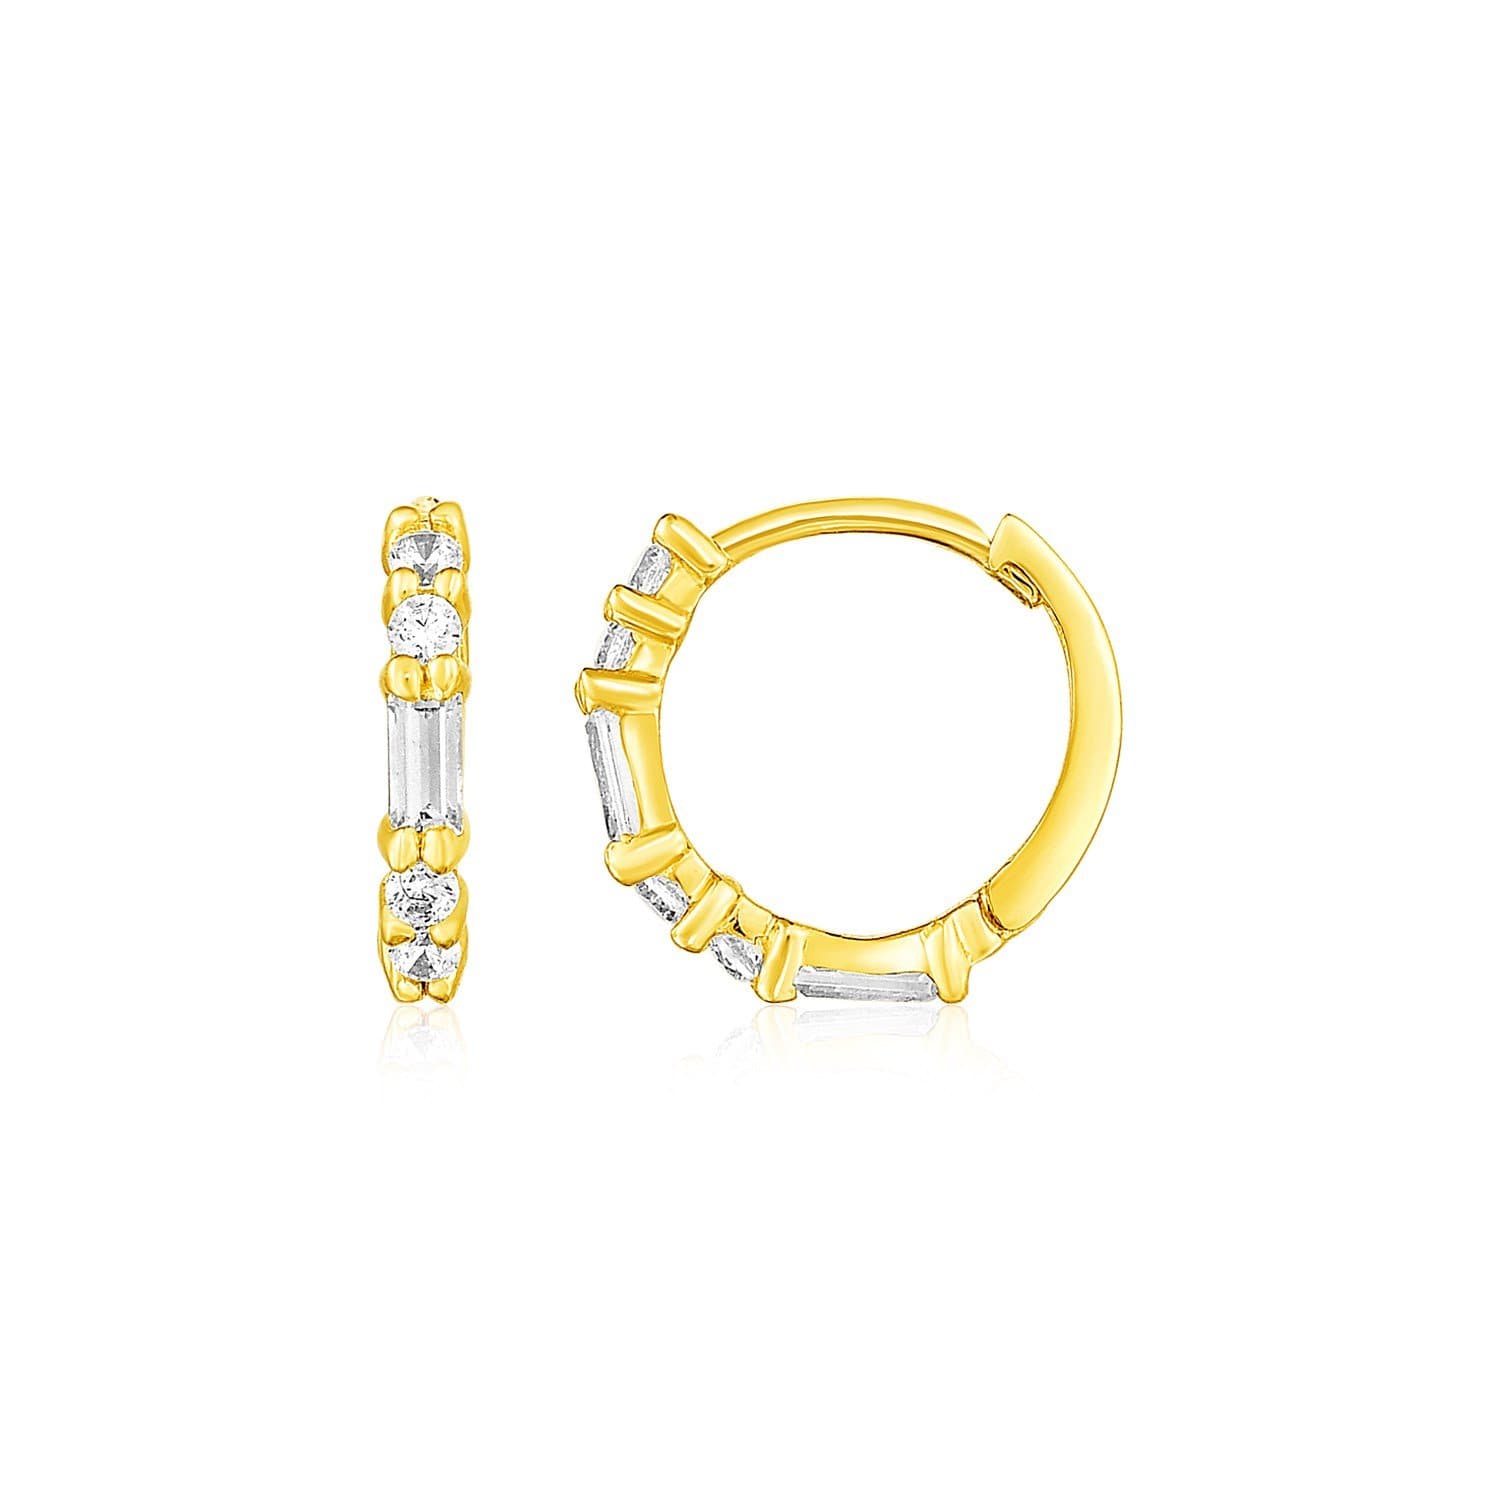 14k Yellow Gold Petite Hoop Earrings with Baguette Cubic Zirconias